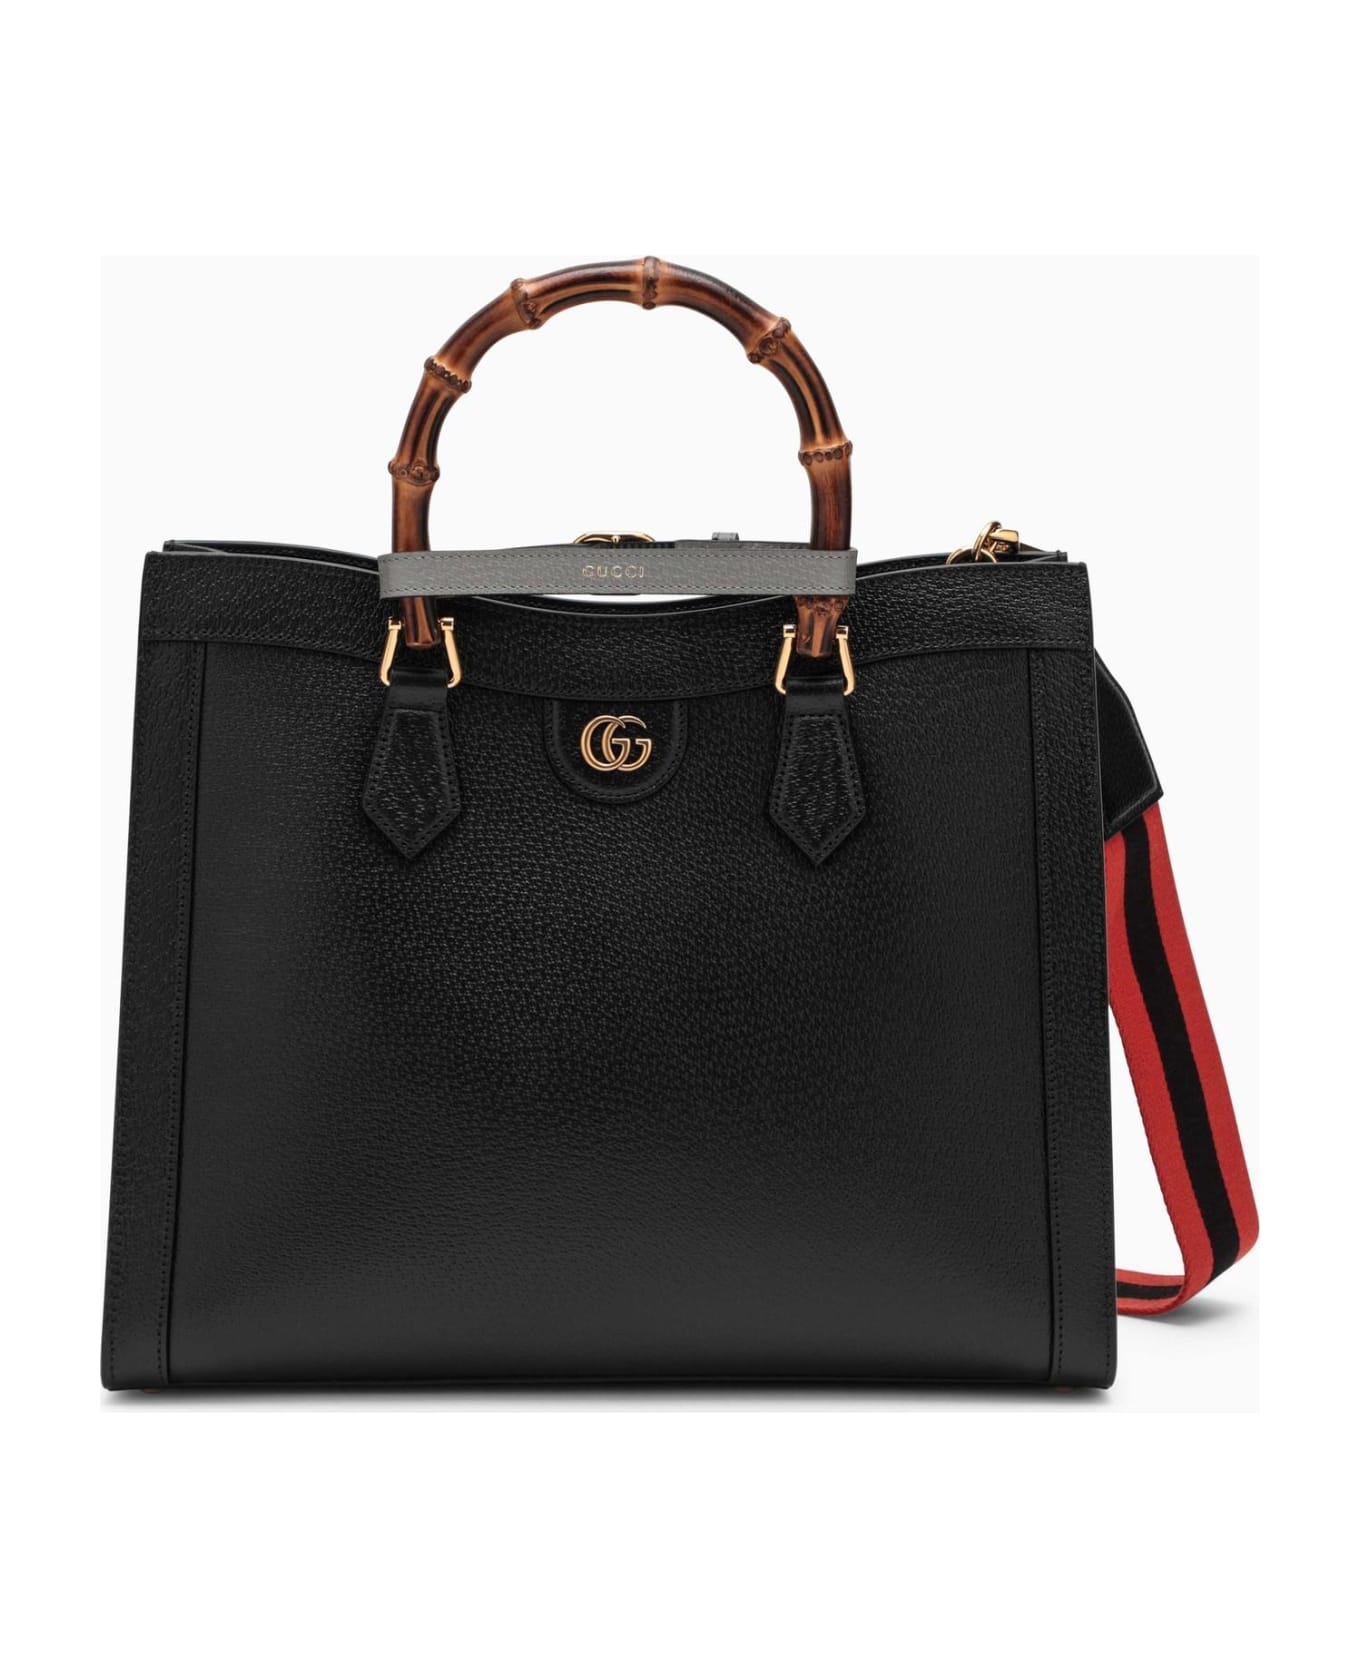 Gucci Diana Black Medium Tote Bag